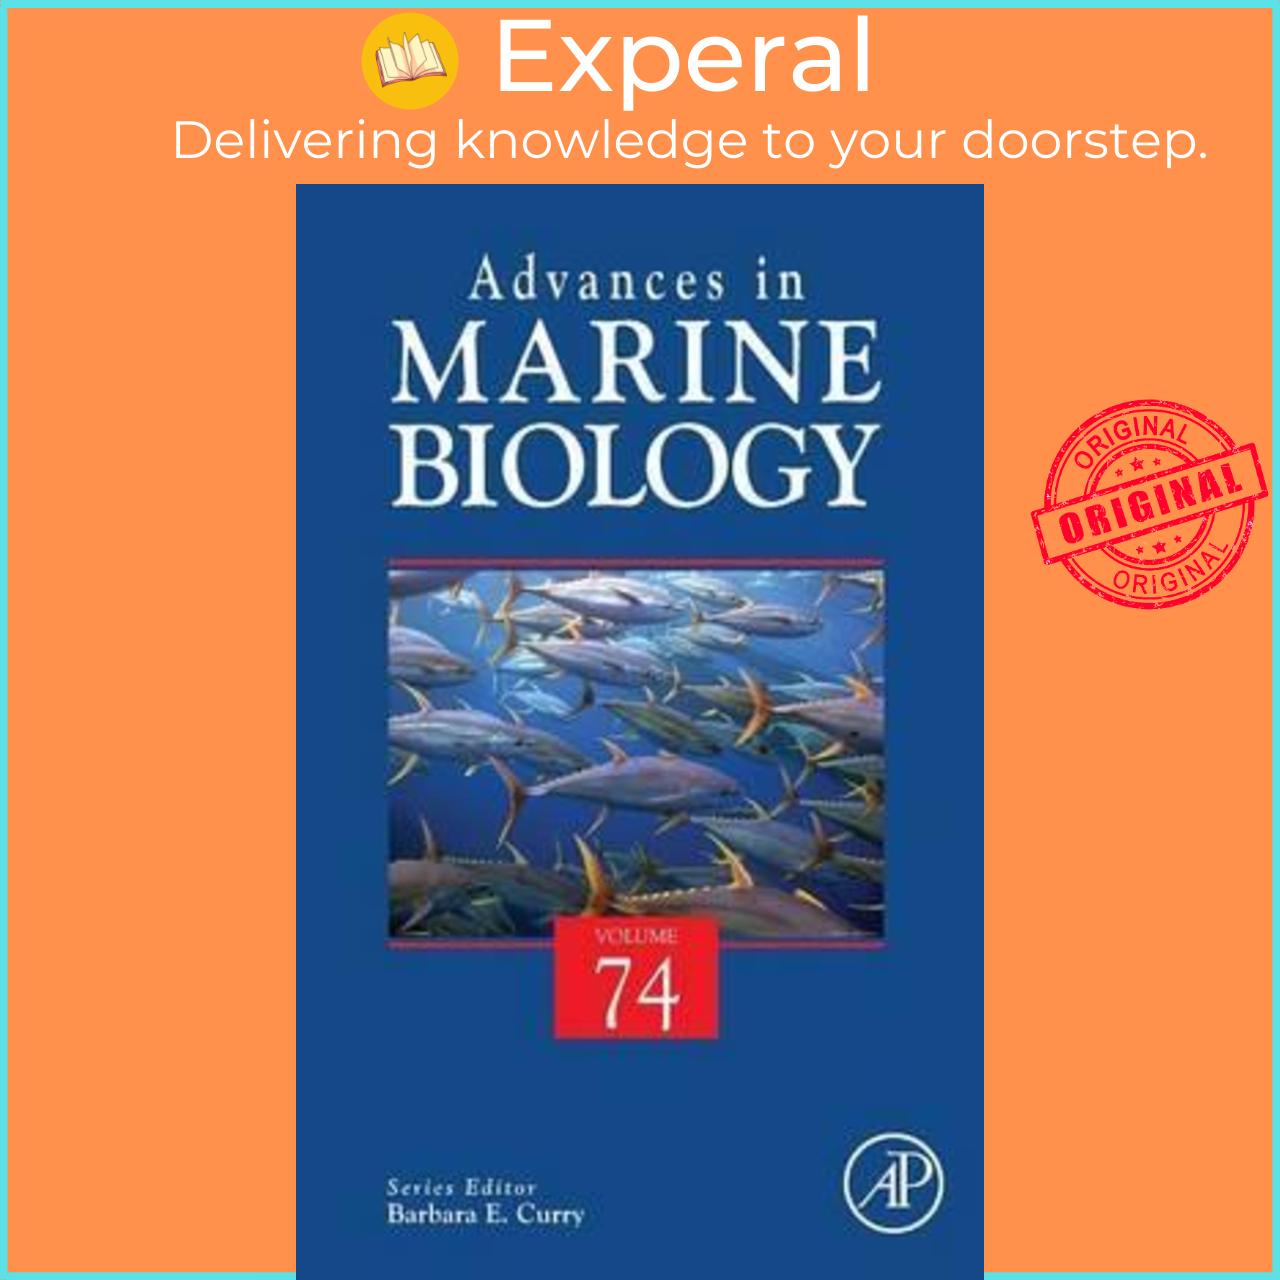 Hình ảnh Sách - Advances in Marine Biology by Barbara E. Curry (US edition, hardcover)